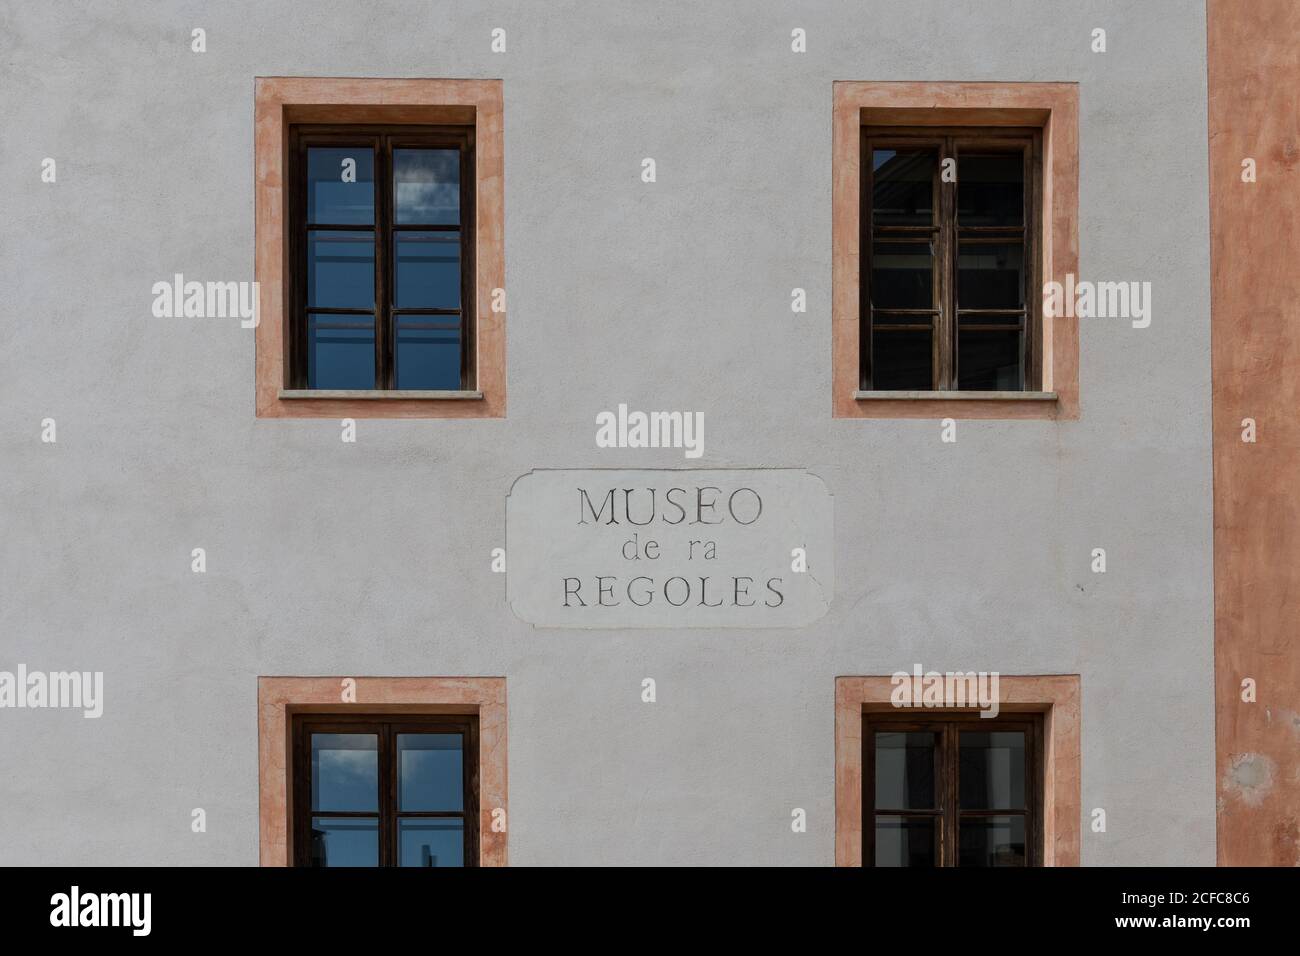 Museo de ra Regoles, Cortina d’Ampezzo, Venetien, Italien Stockfoto